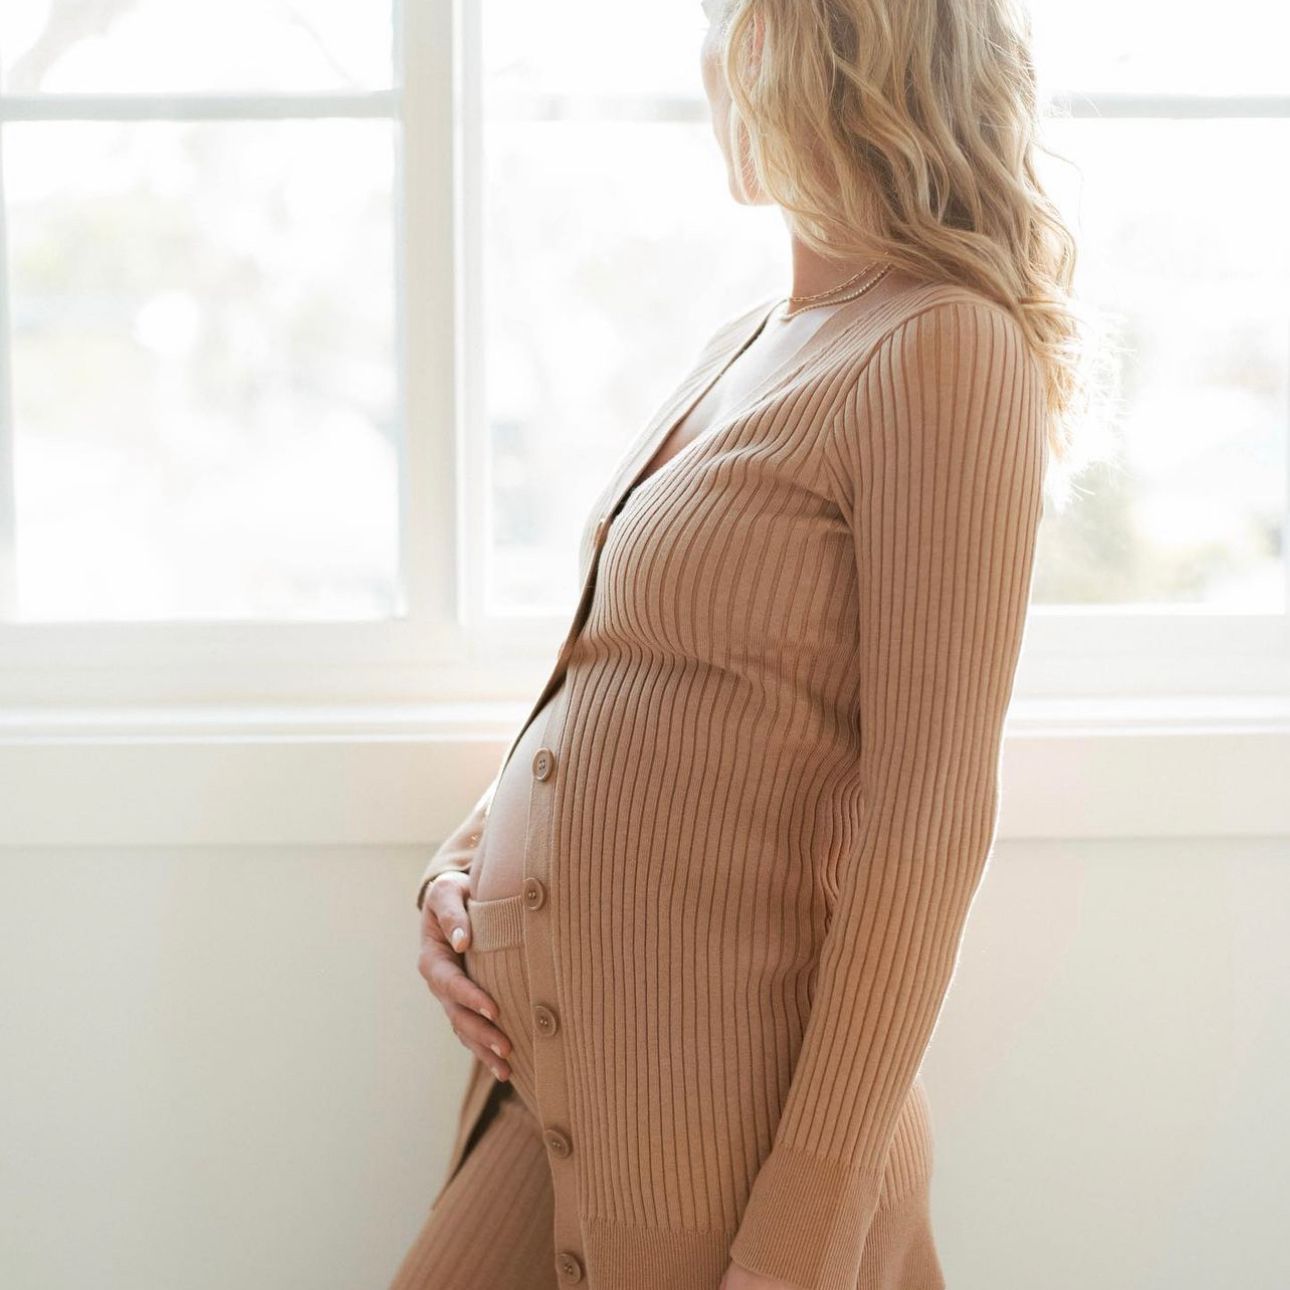 Pregnancy, fashion